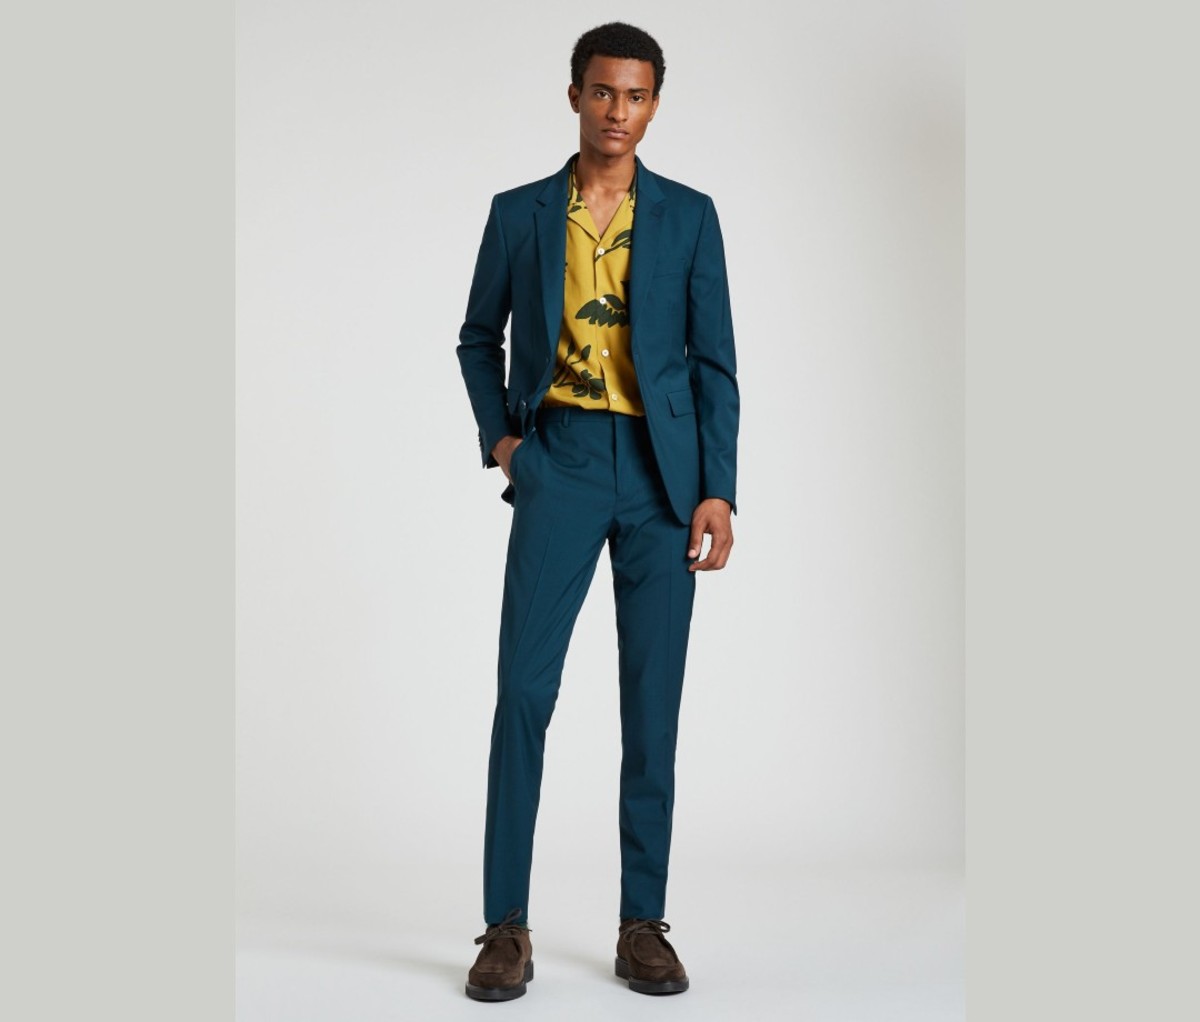 Paul Smith—The Kensington Men's Slim-Fit Teal Cerruti Wool-Stretch Suit